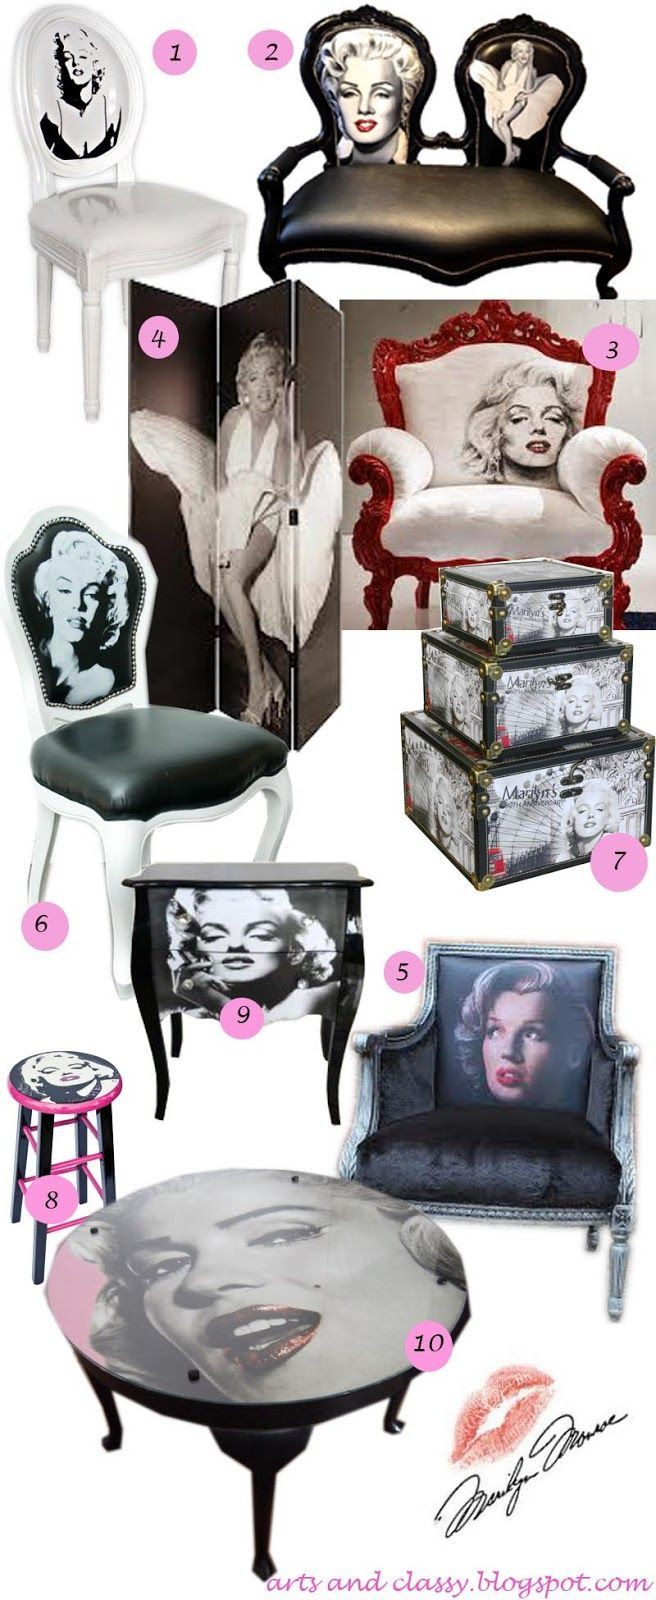 Best ideas about Marilyn Monroe Gift Ideas
. Save or Pin 25 best ideas about Marilyn monroe decor on Pinterest Now.